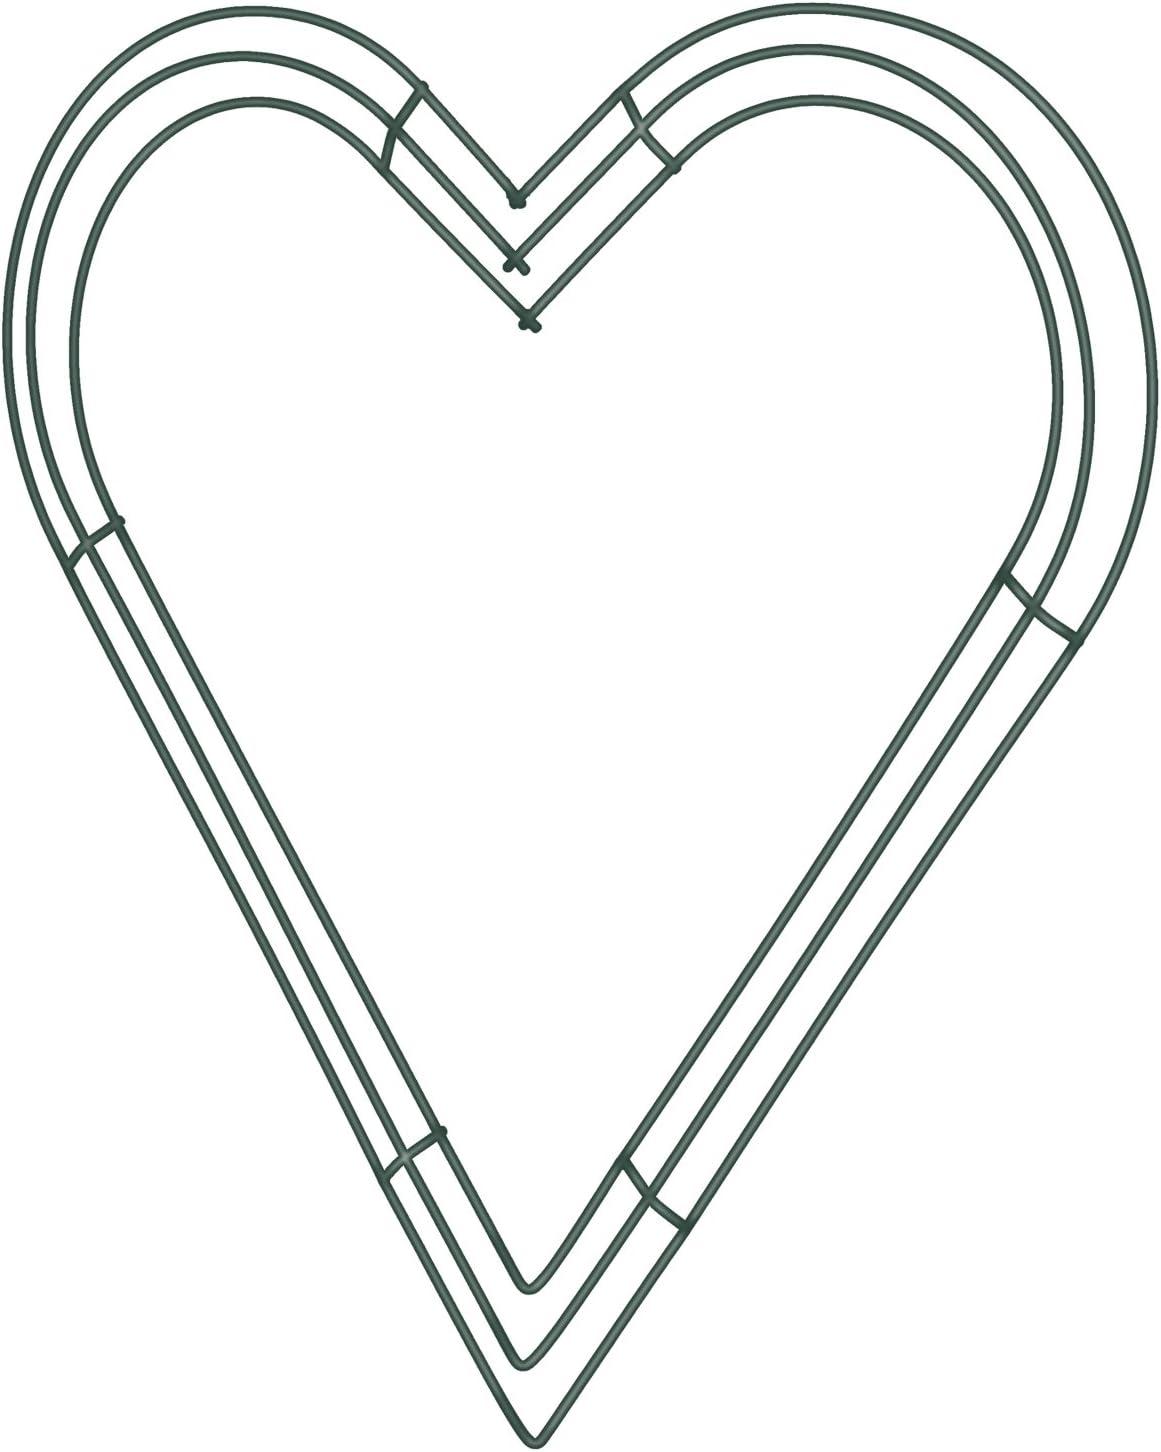 Heart Metal Floral Wreath Frame-heart Shaped Metal Wreath Ring